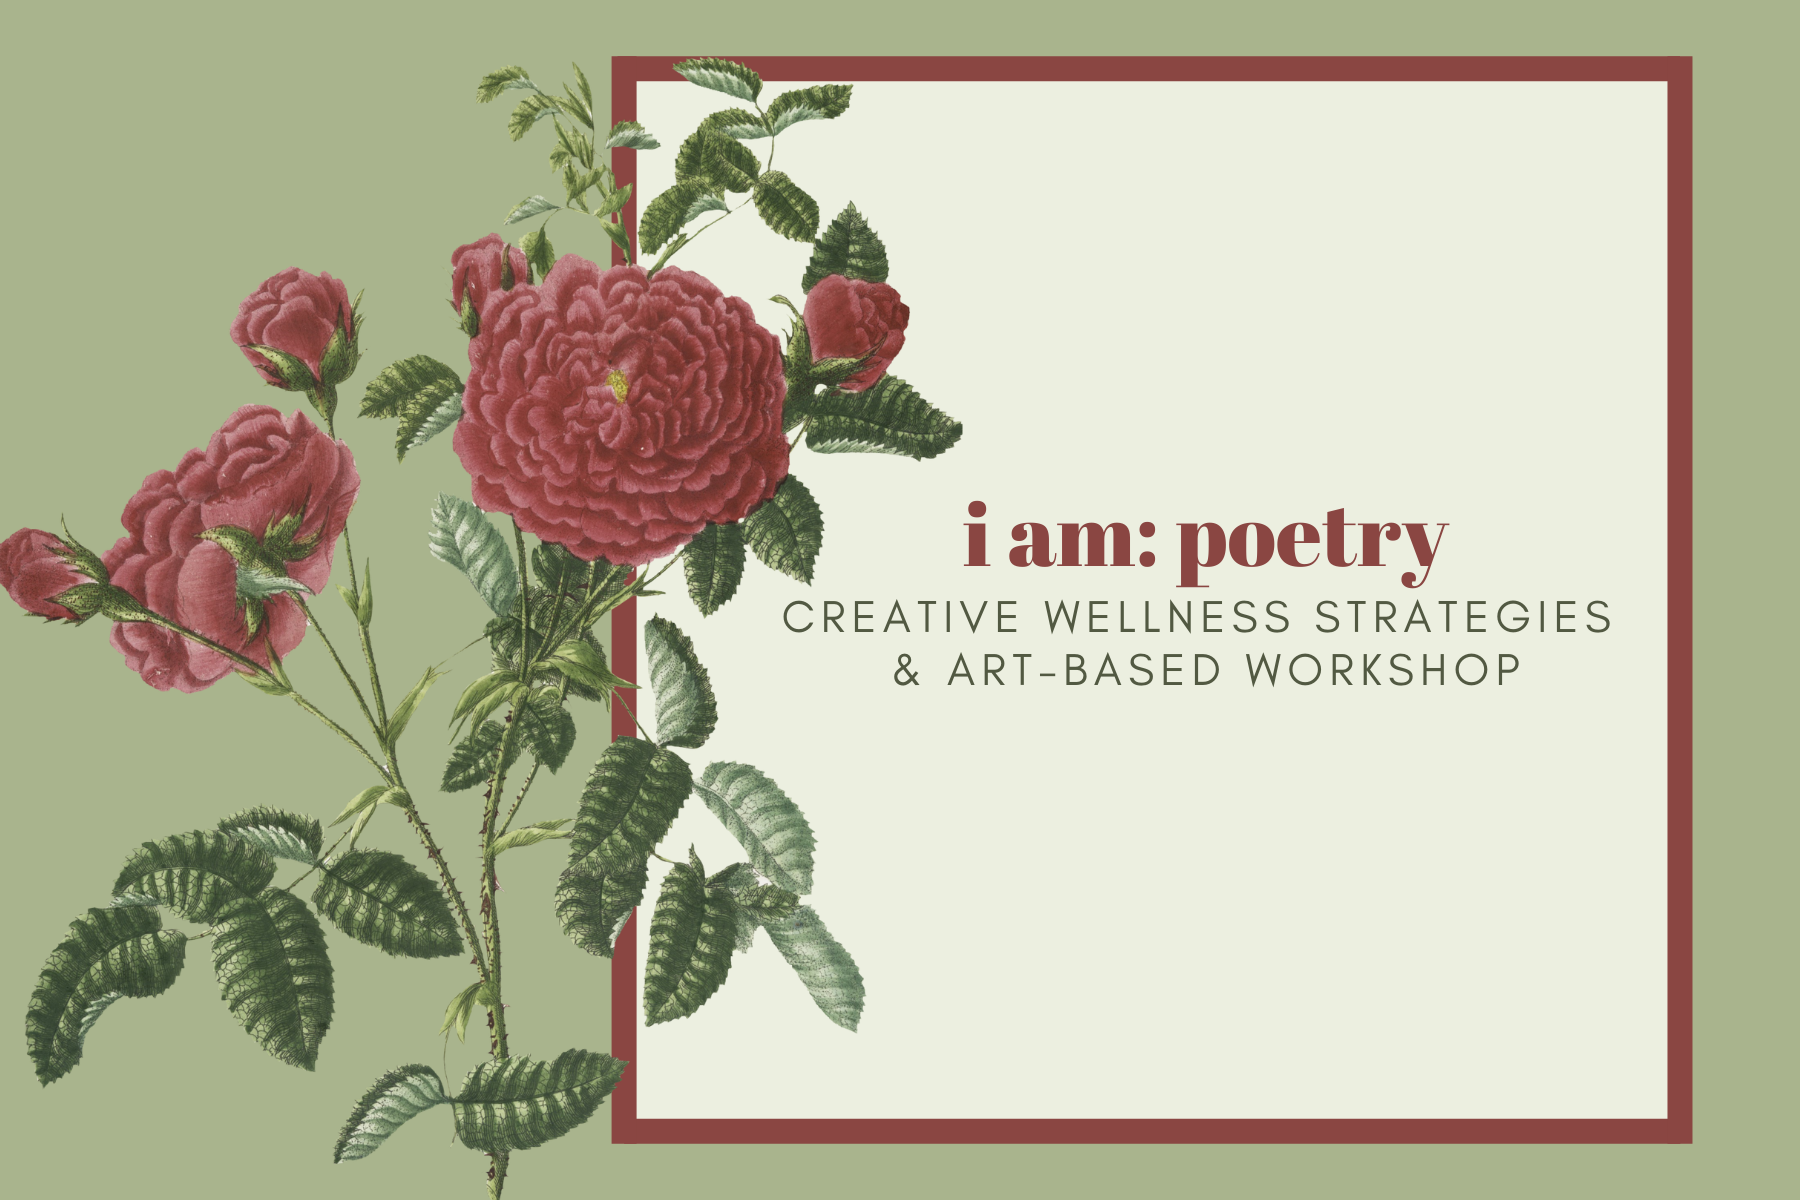 I am: Poetry Workshop